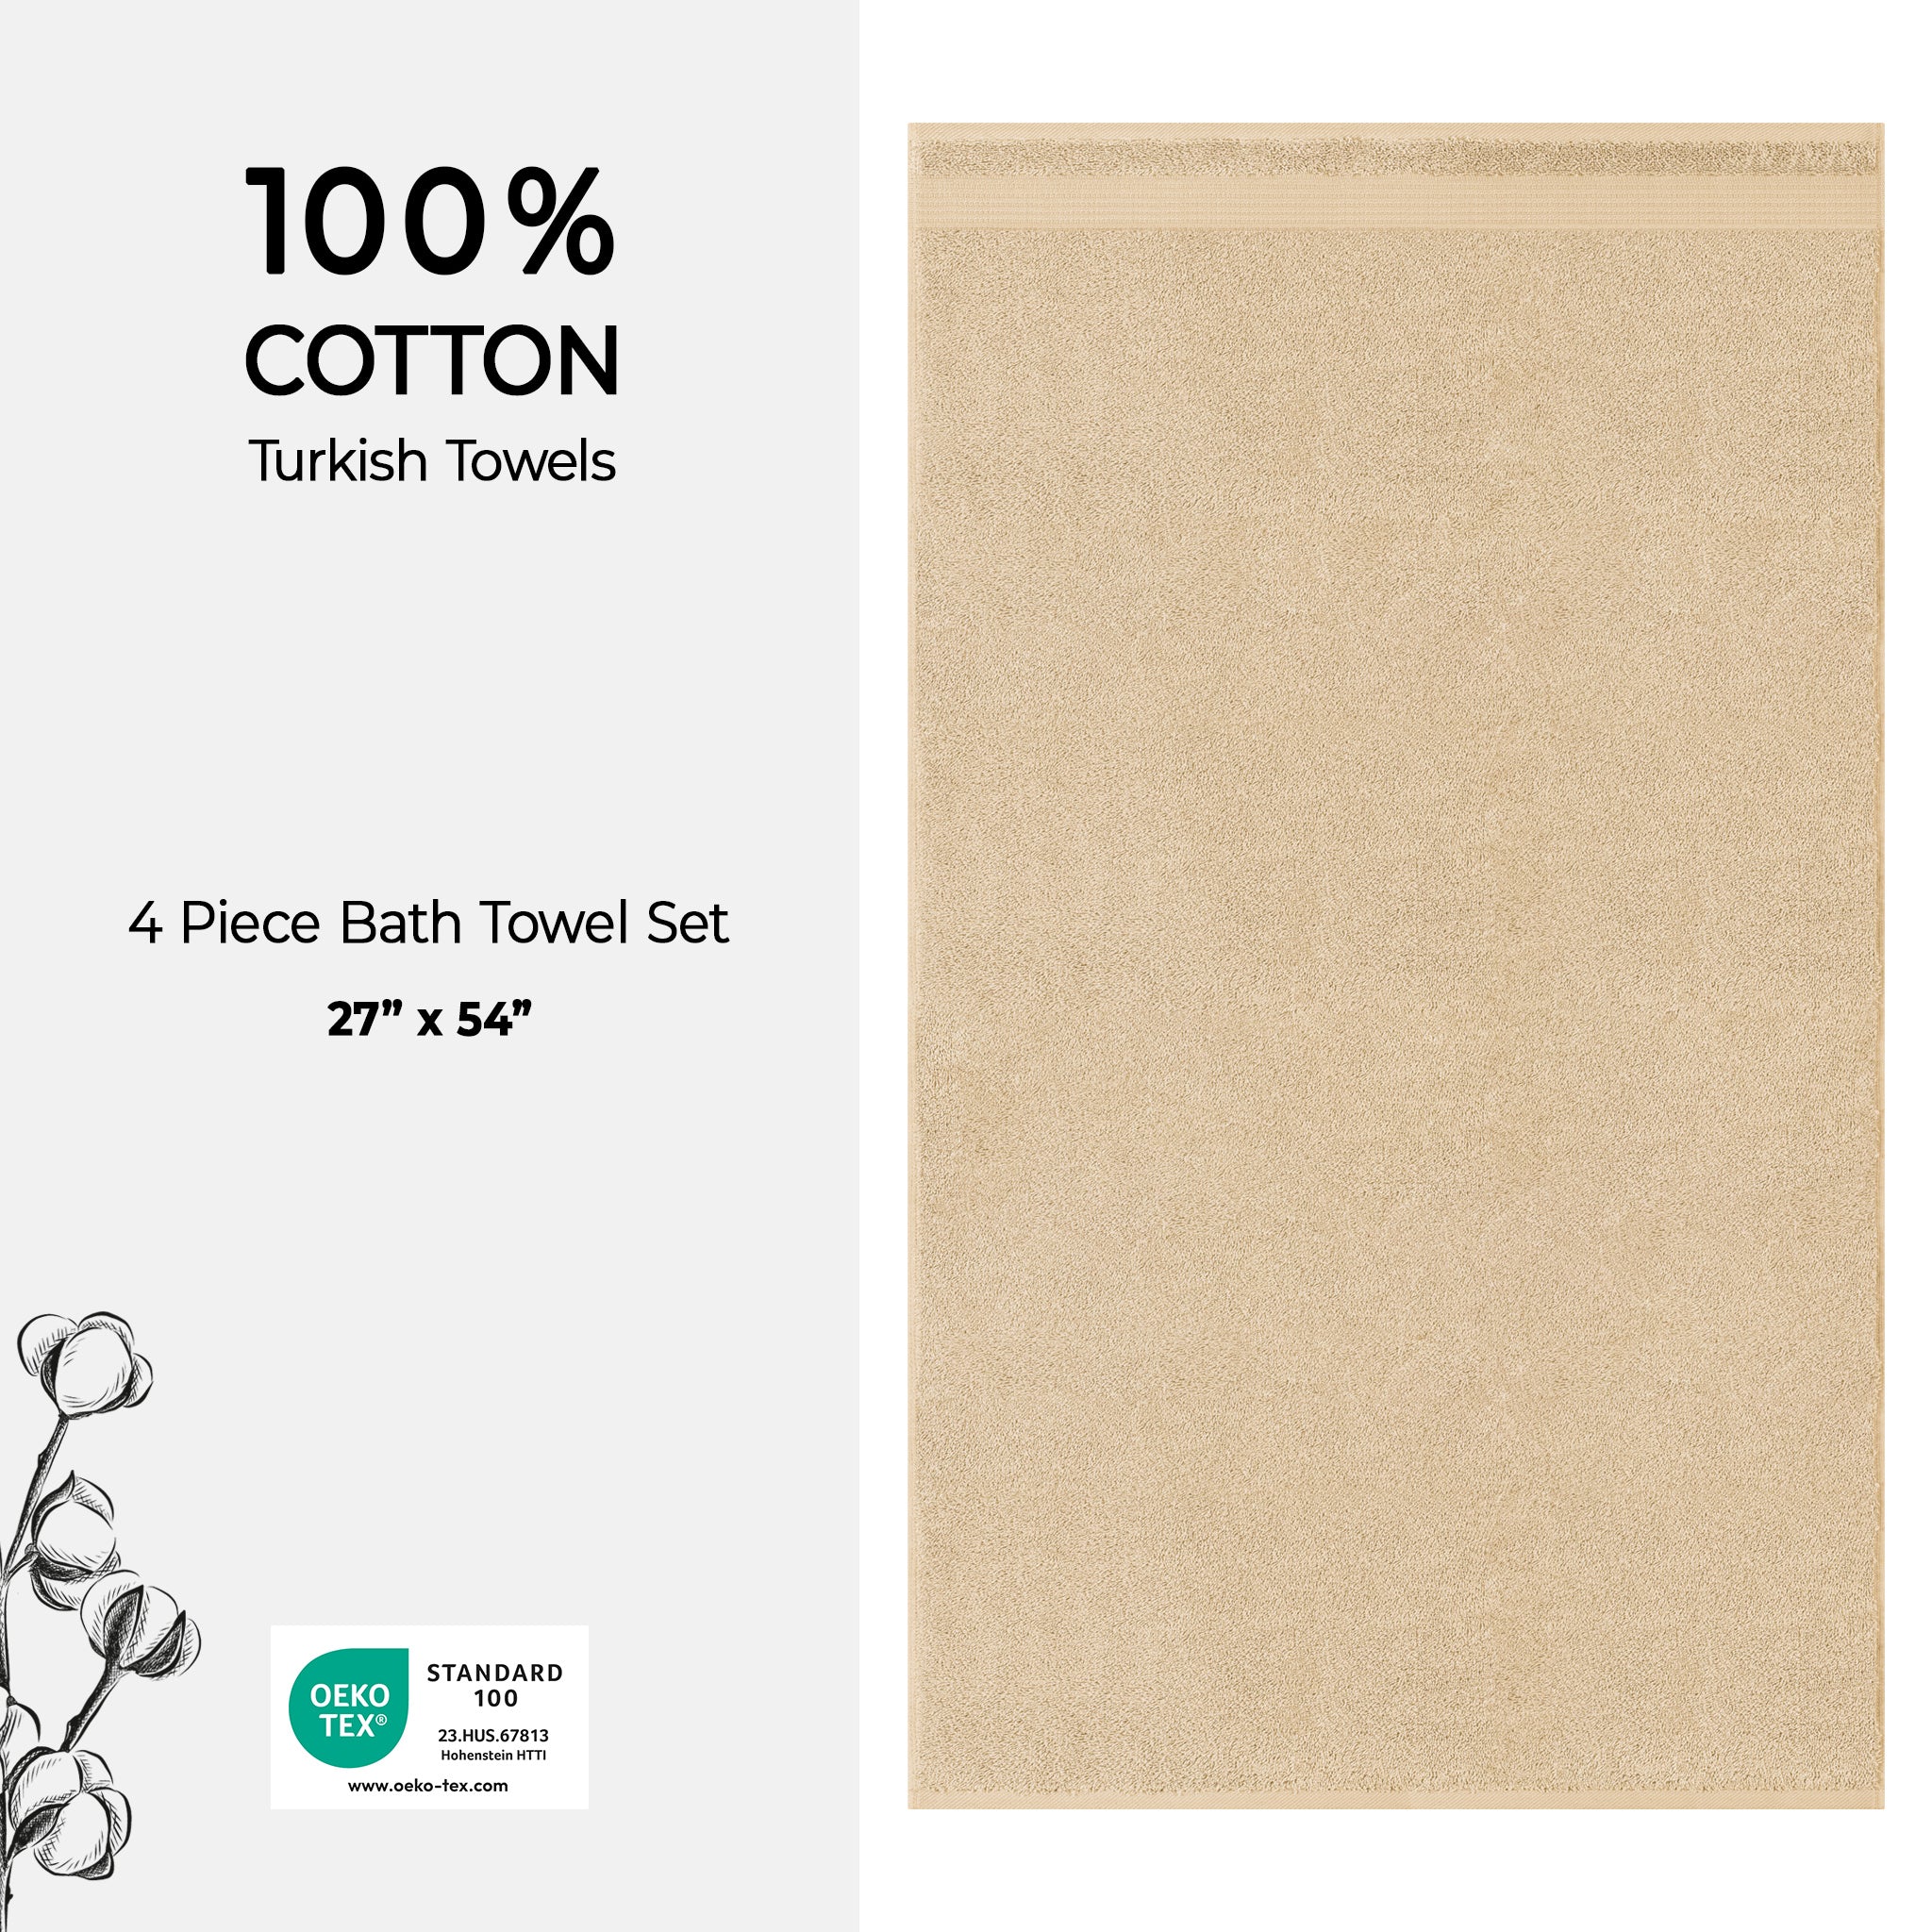 American Soft Linen Bekos 100% Cotton Turkish Towels, 4 Piece Bath Towel Set -sand-taupe-04